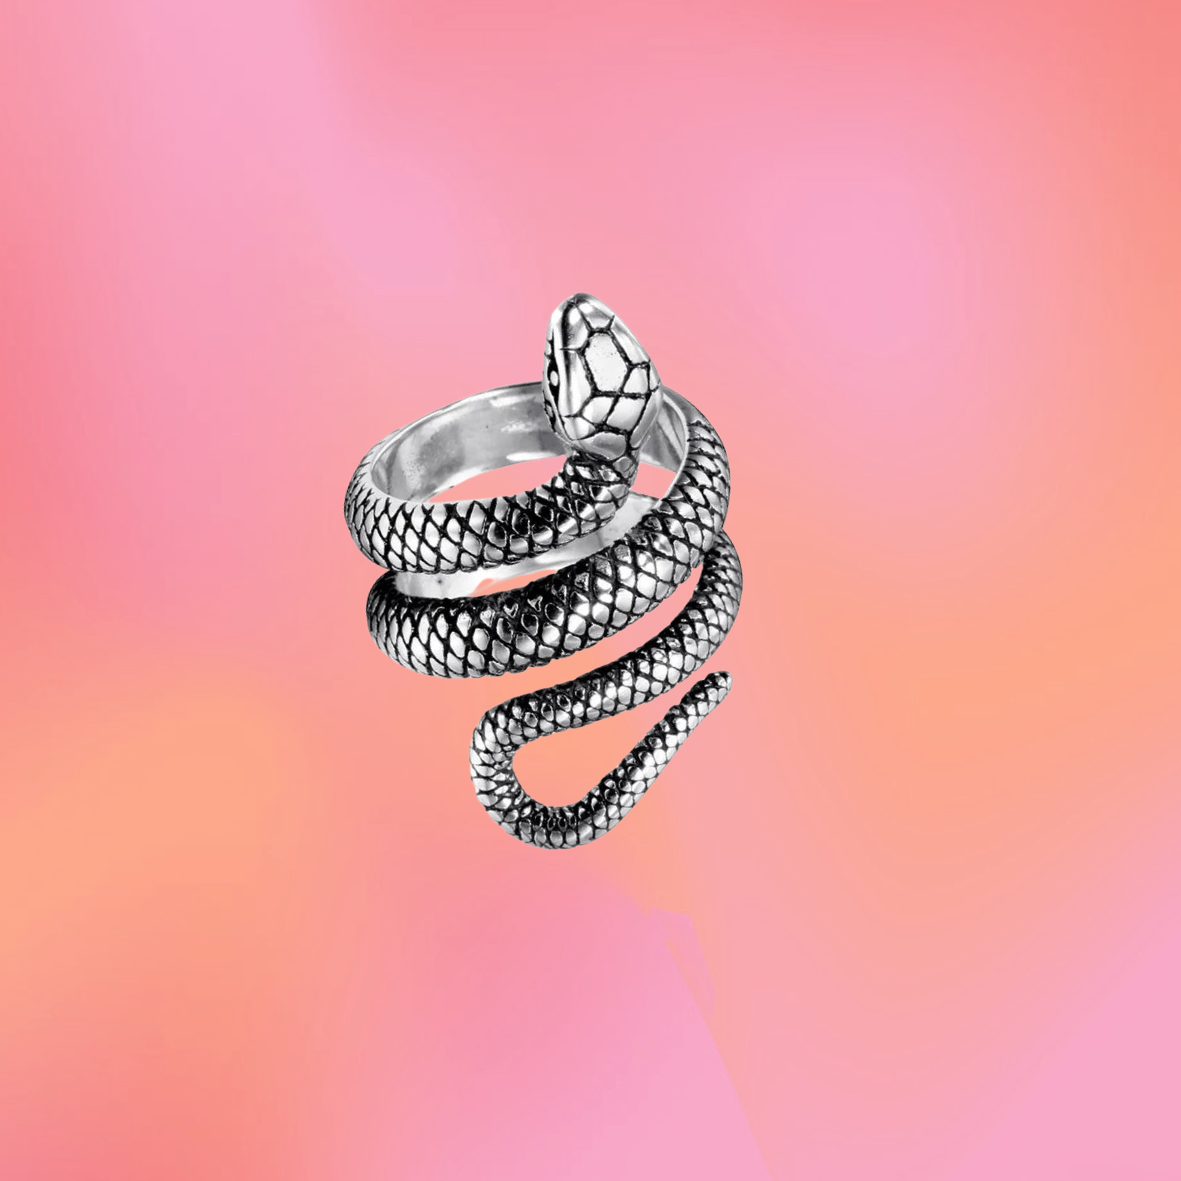 Titanium Snake Ring